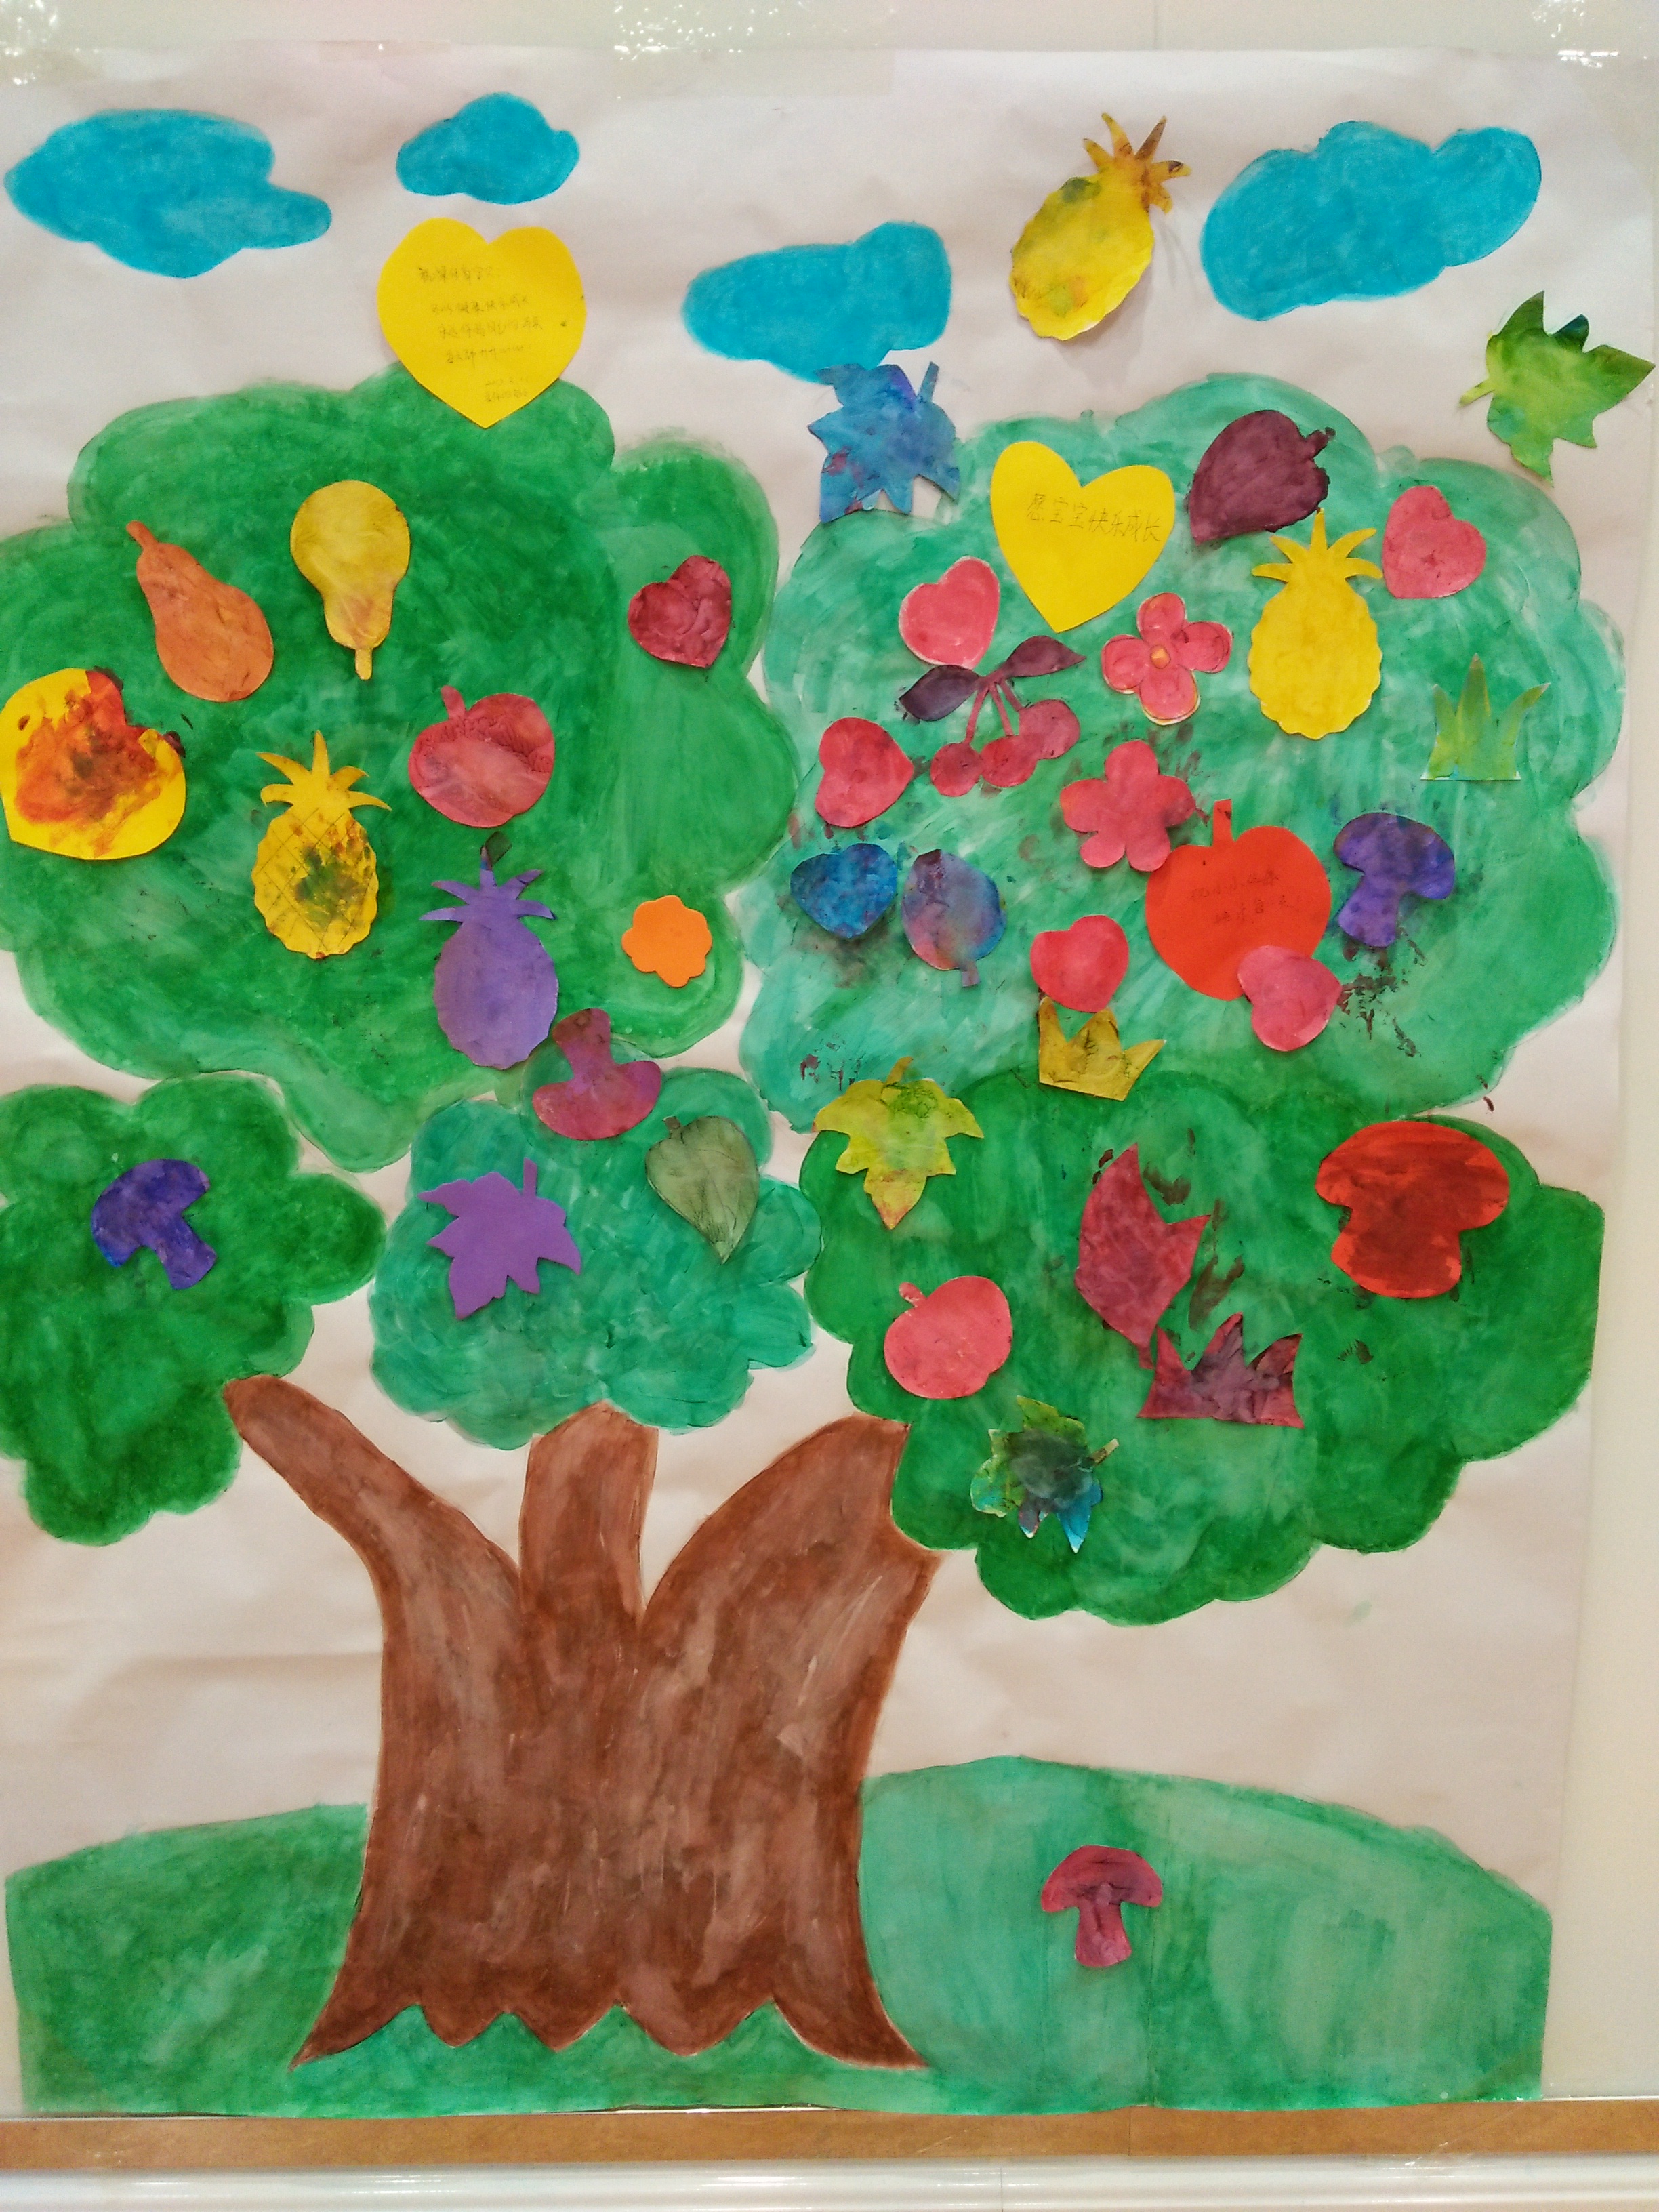 nyc纽约国际大连印象城早教中心:我伴小树共成长回顾